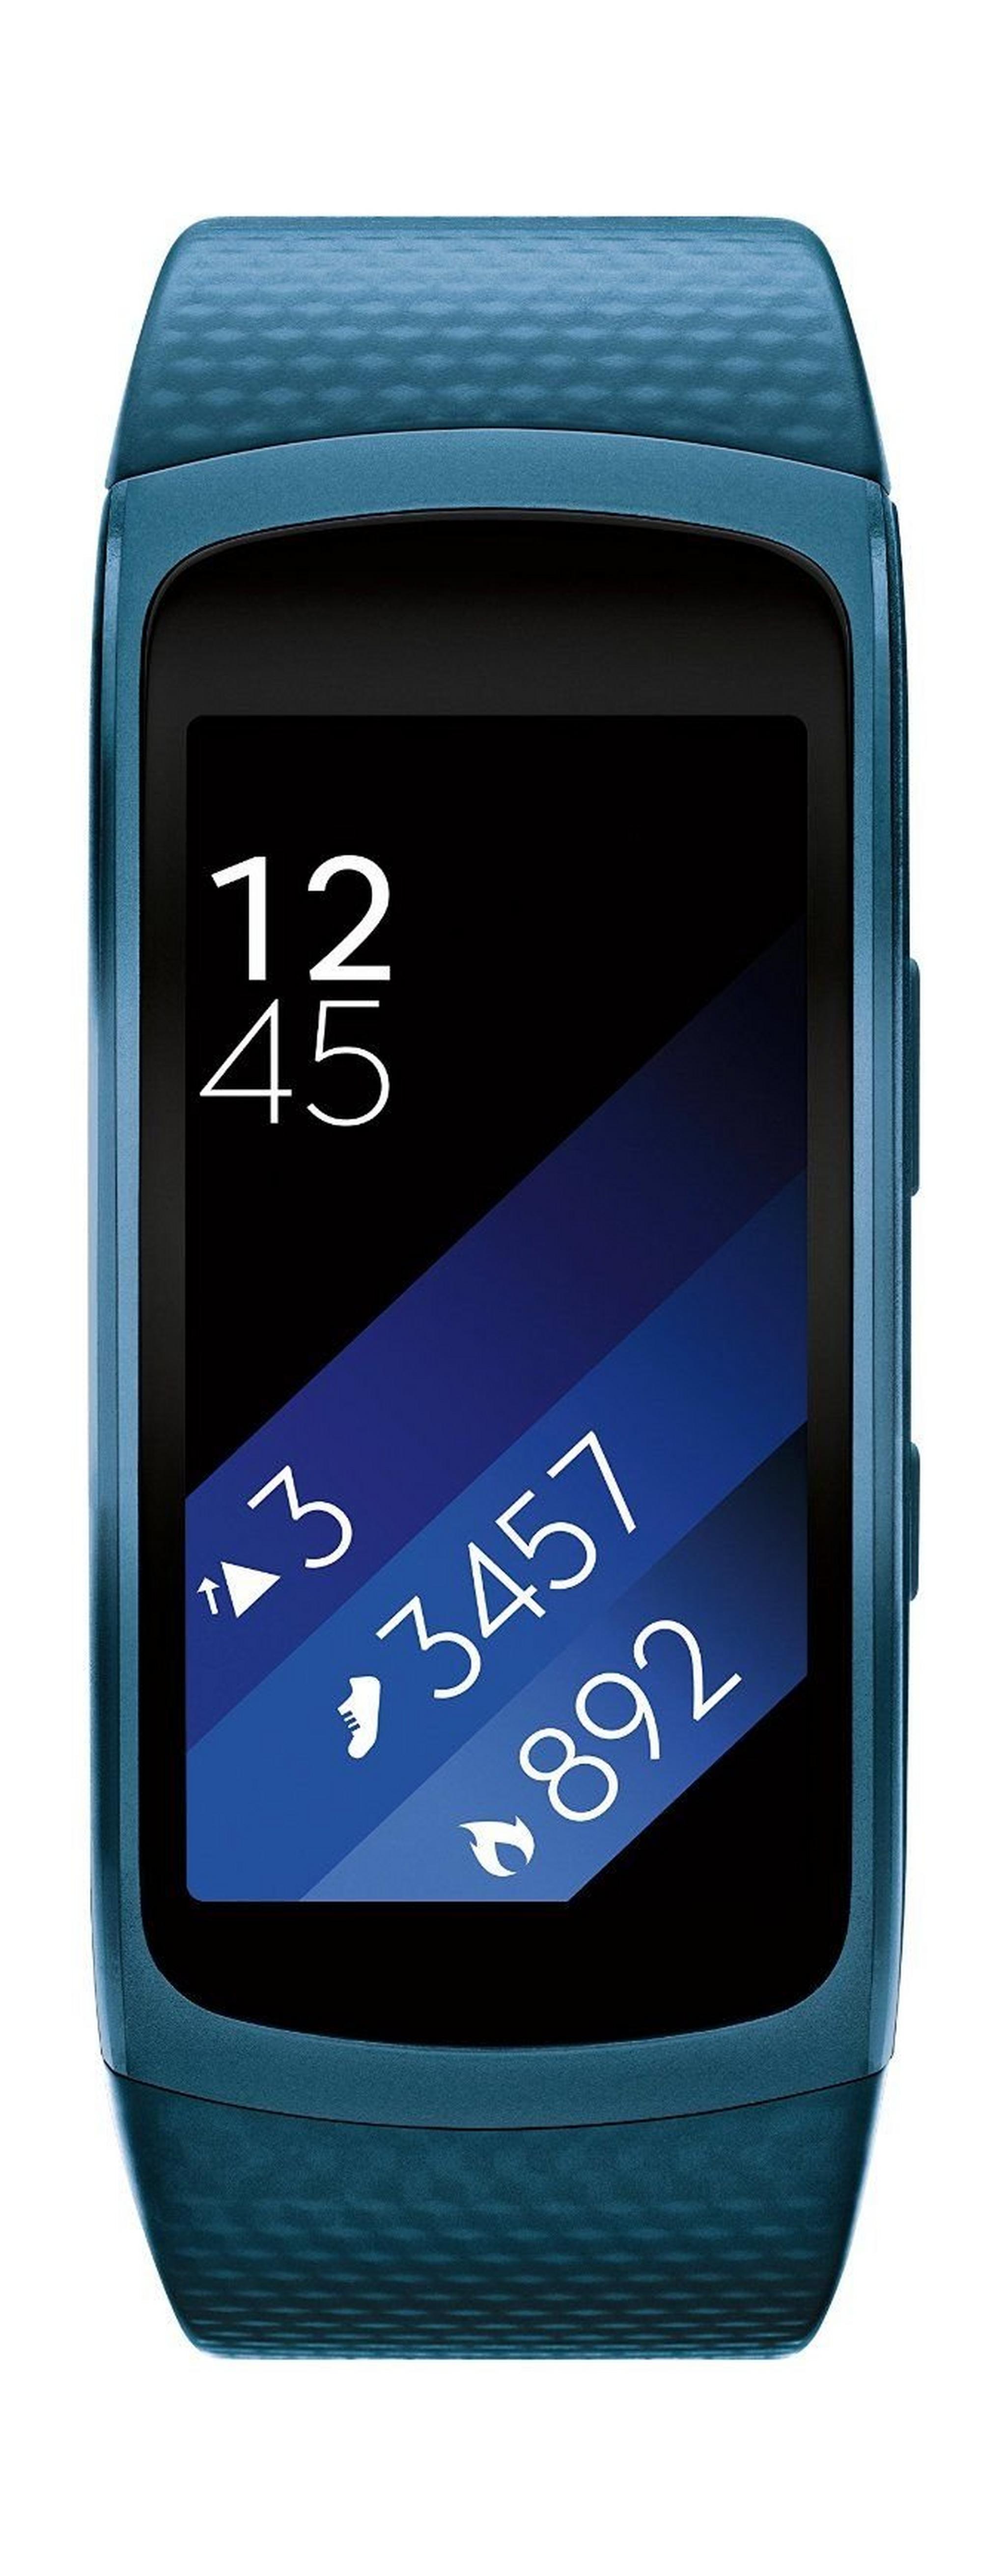 Samsung Gear Fit 2 Fitness Tracker (Small) – Blue